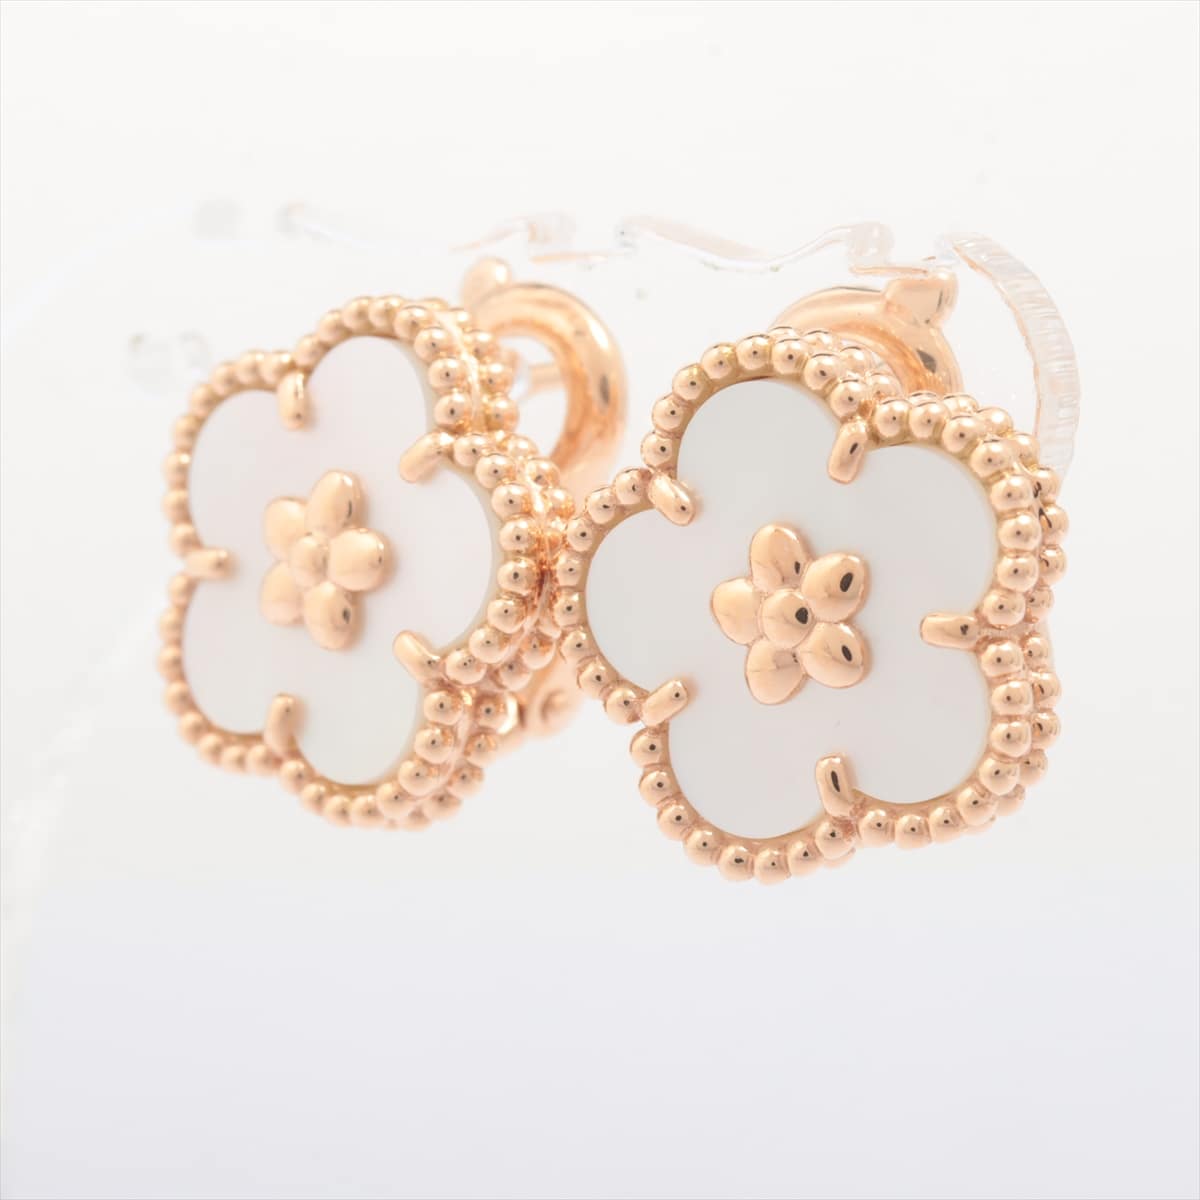 Van Cleef & Arpels lucky spring plum blossom shells Piercing jewelry 750(PG) 8.0g